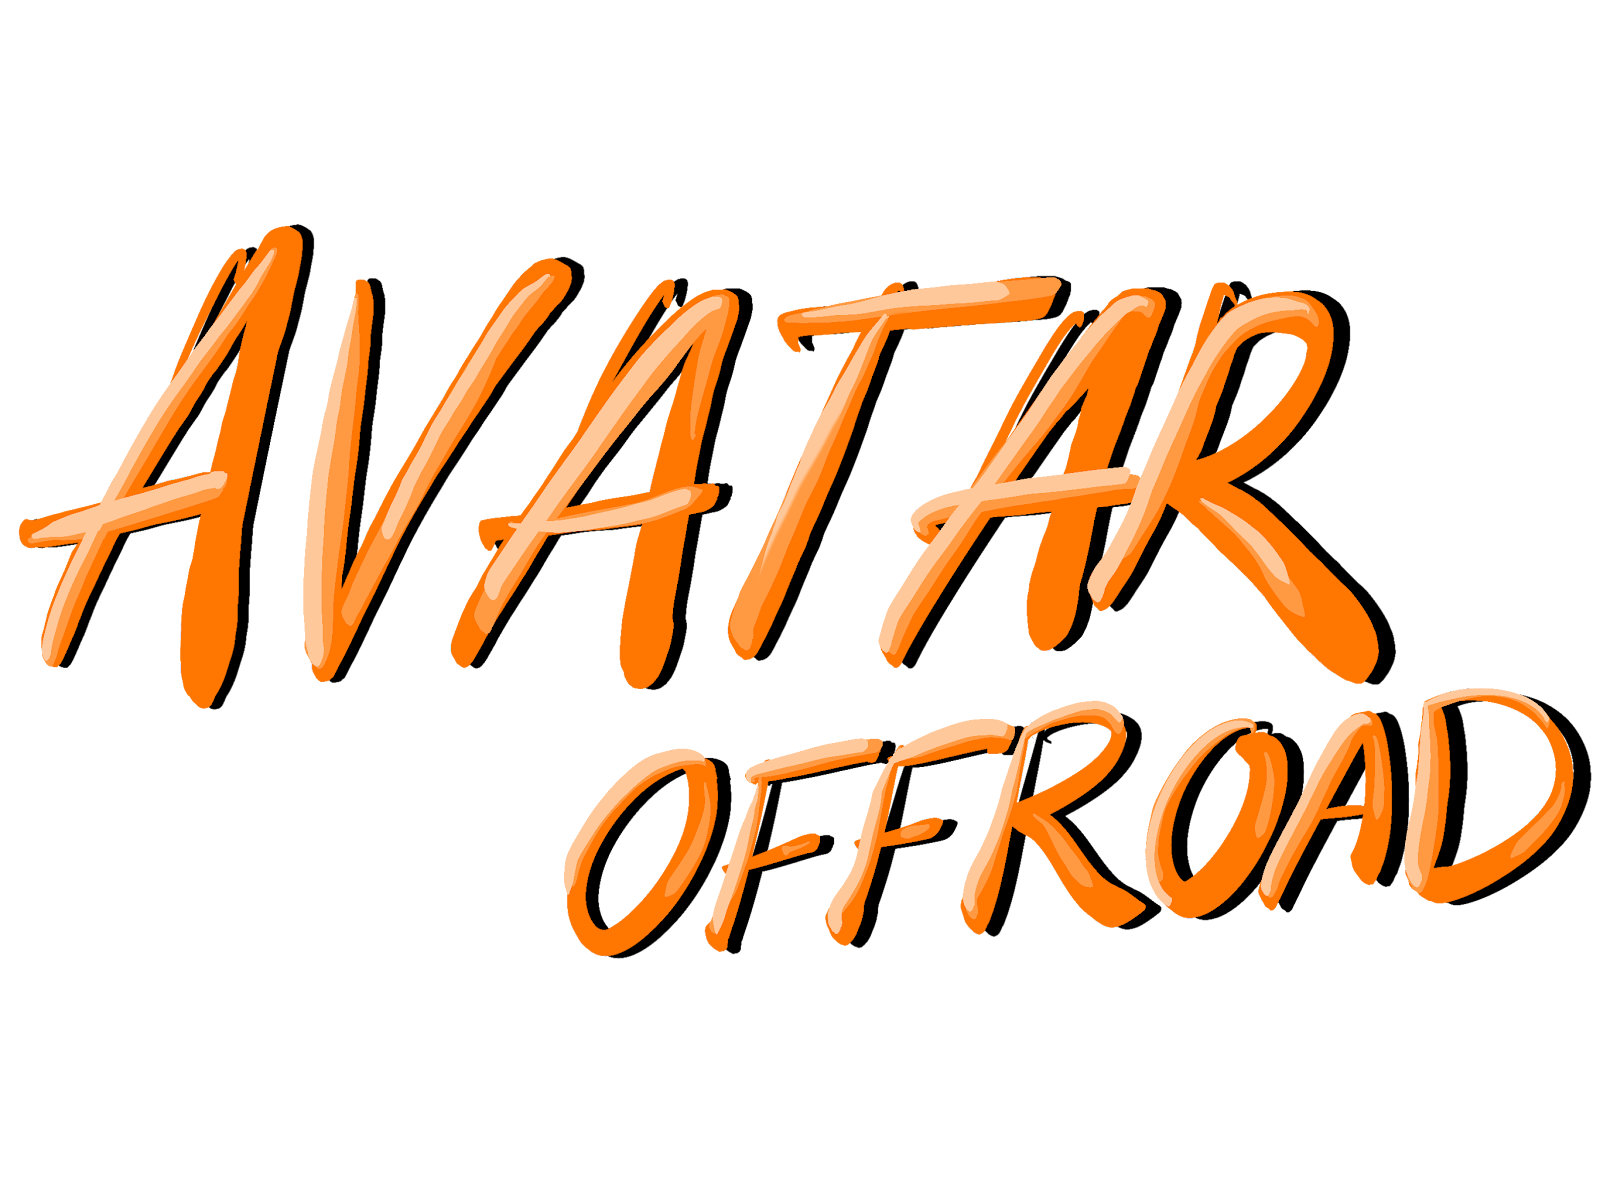 Avatar Offroad Logo